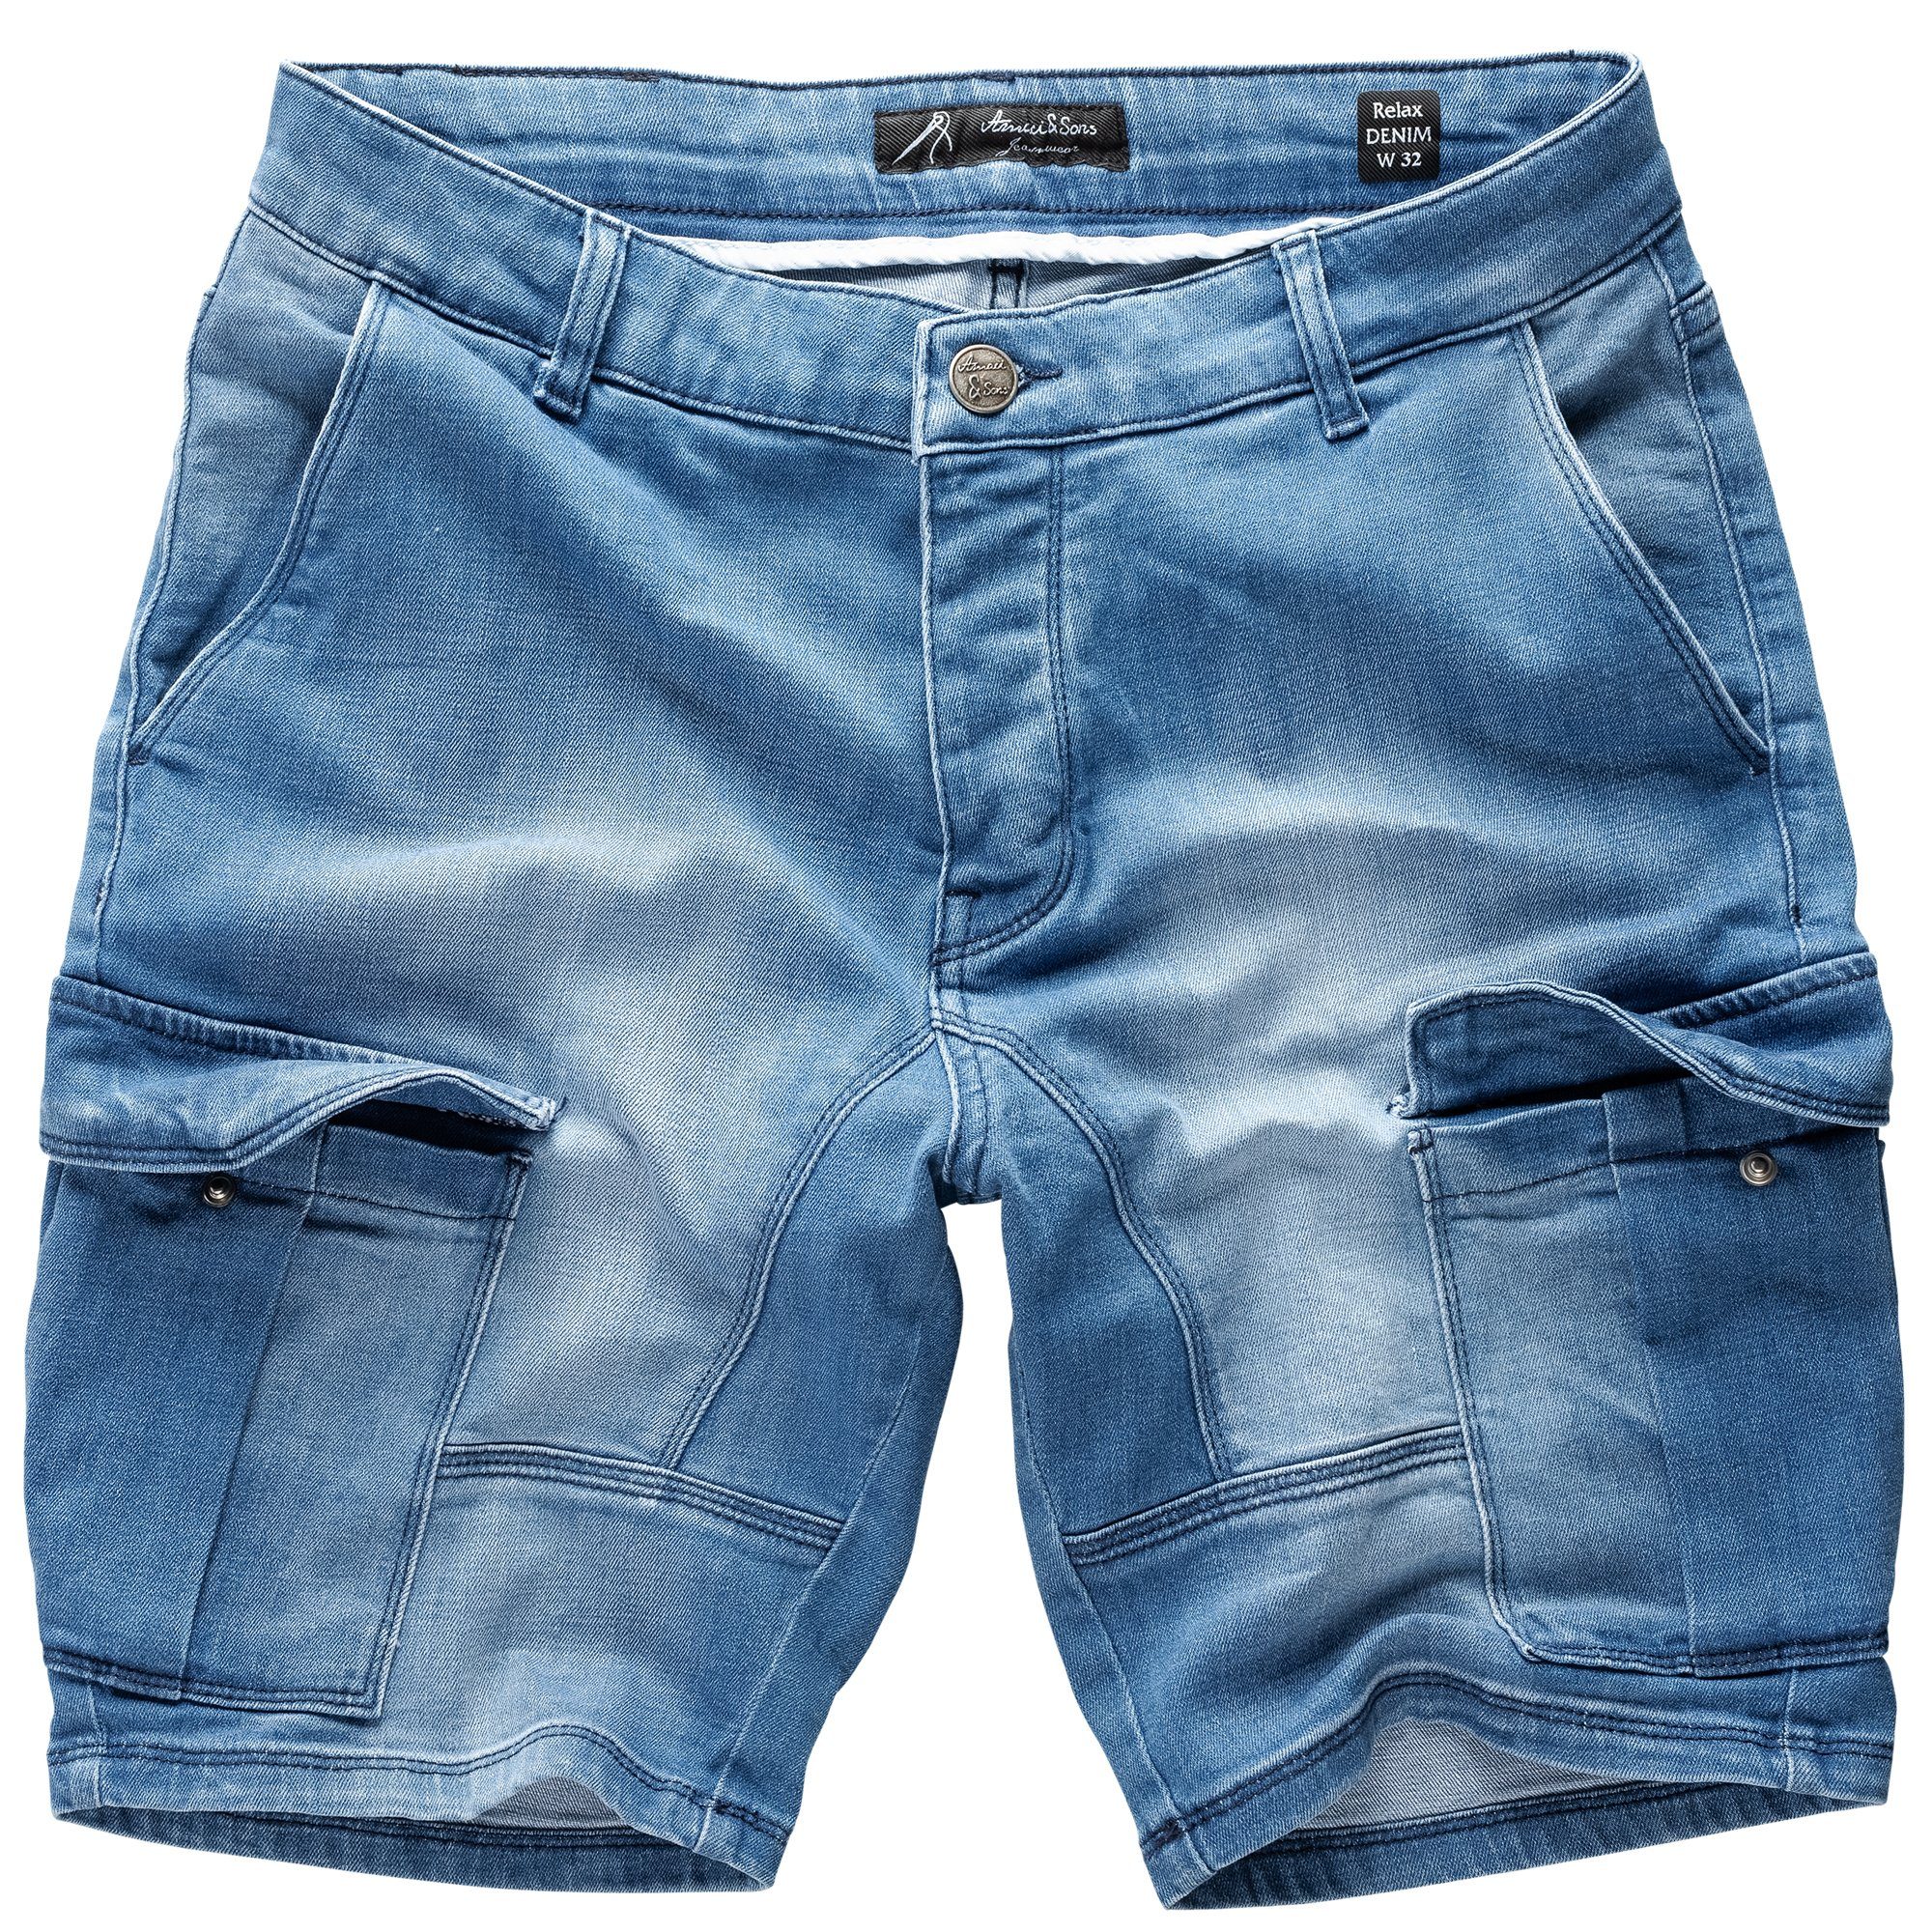 Jeans SAN Jeansshorts Amaci&Sons Destroyed Dunkelblau DIEGO Shorts